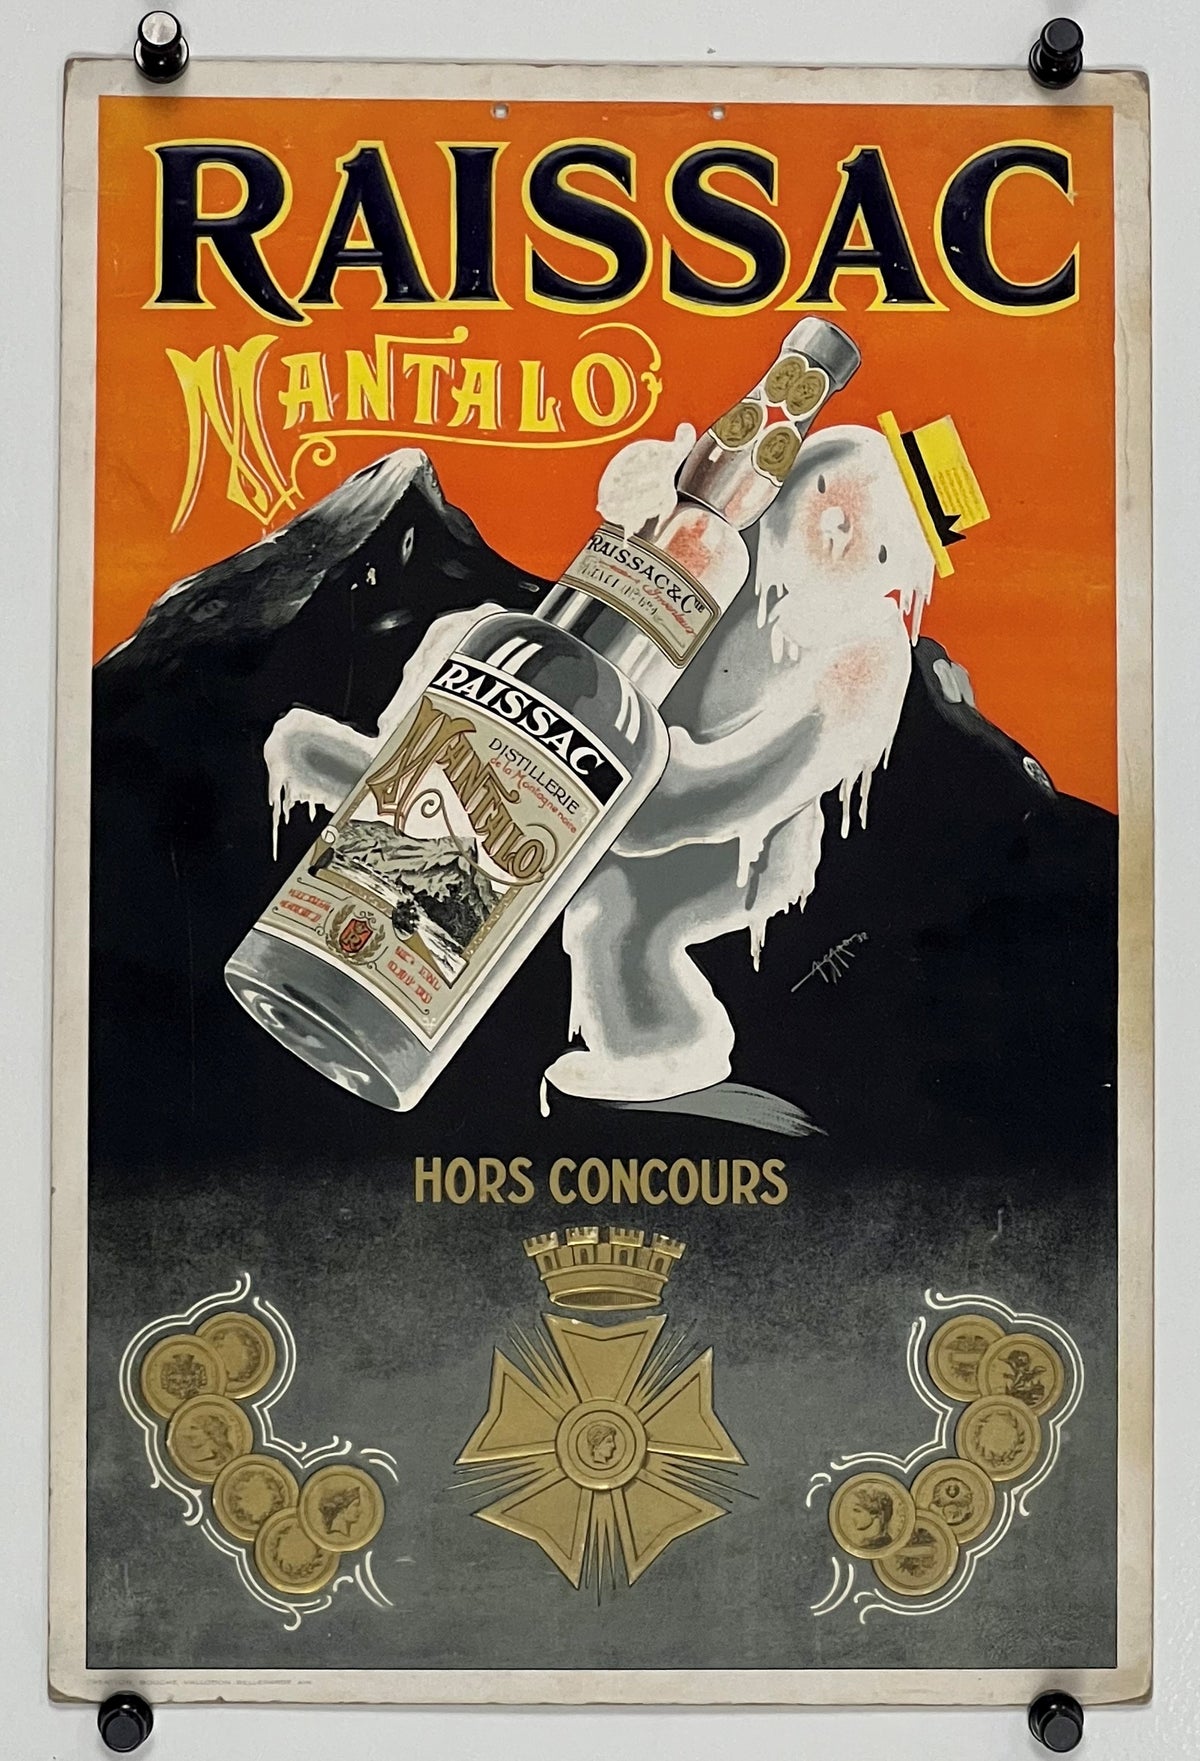 Mantalo-Raissac Alcohol (1932) - Authentic Vintage Window Card